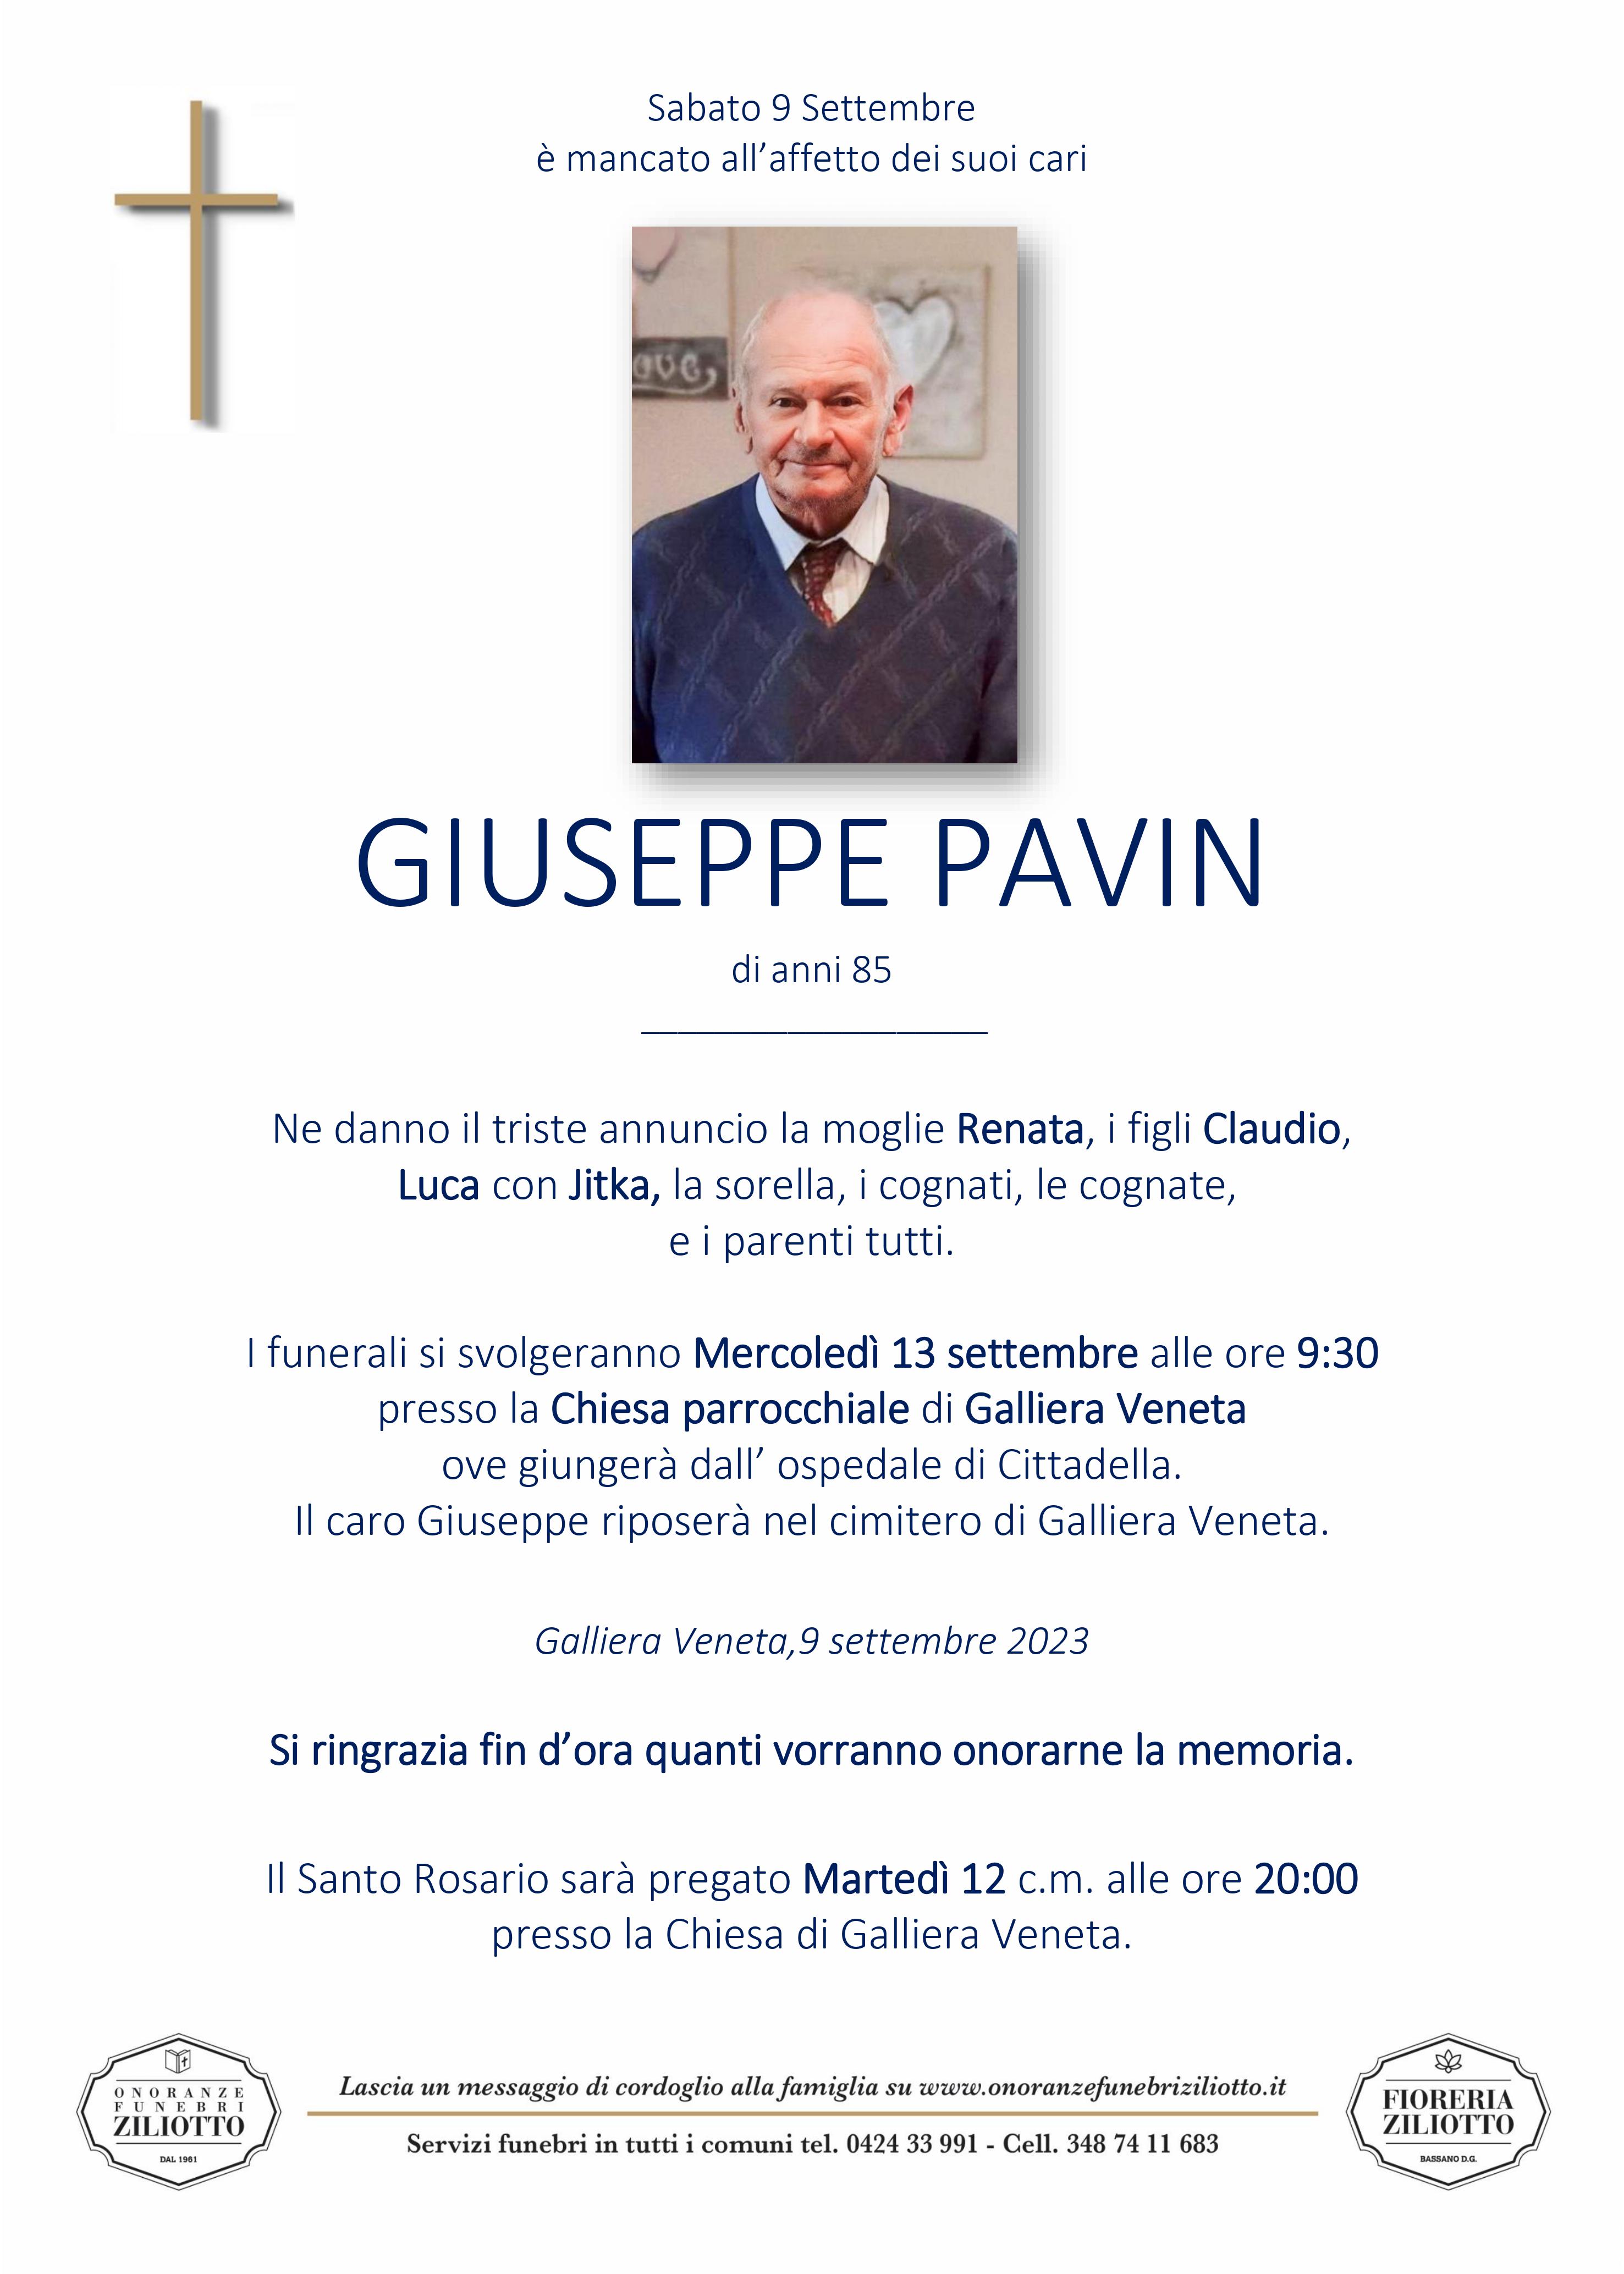 Giuseppe Pavin - 85 anni - Galliera Veneta